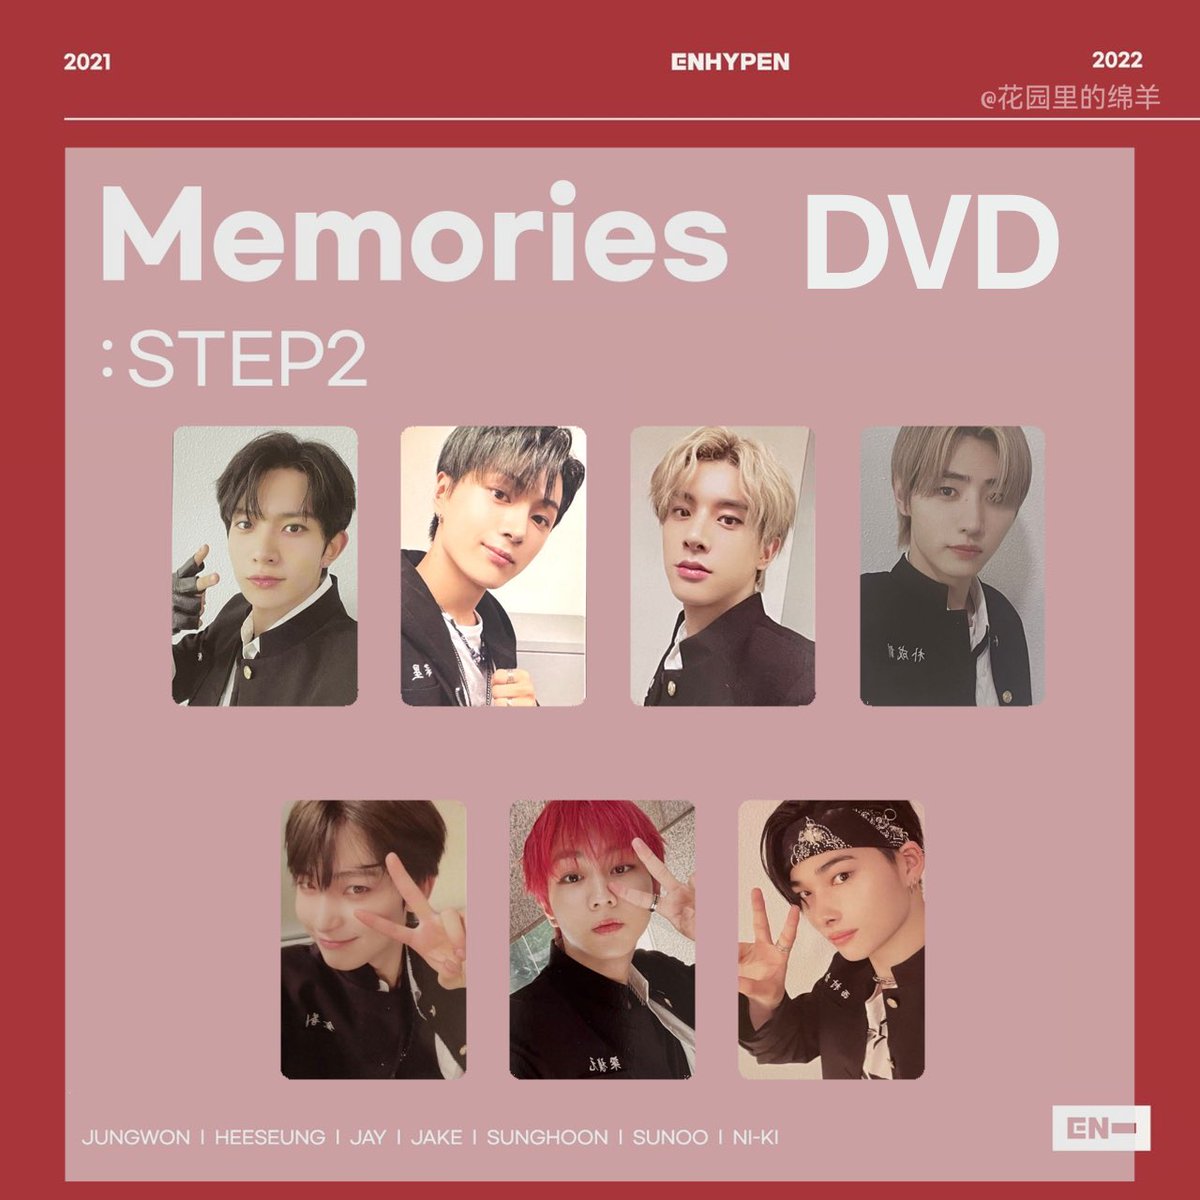 Enhypen [MEMORIES: Step 2] DVD Version Photocard Template 

Jungwon Heeseung Jay Jake Sunghoon Sunoo Niki 
#ENHYPEN #MEMORIES_STEP2
 
ctto.
‼️photo credits to original owners‼️